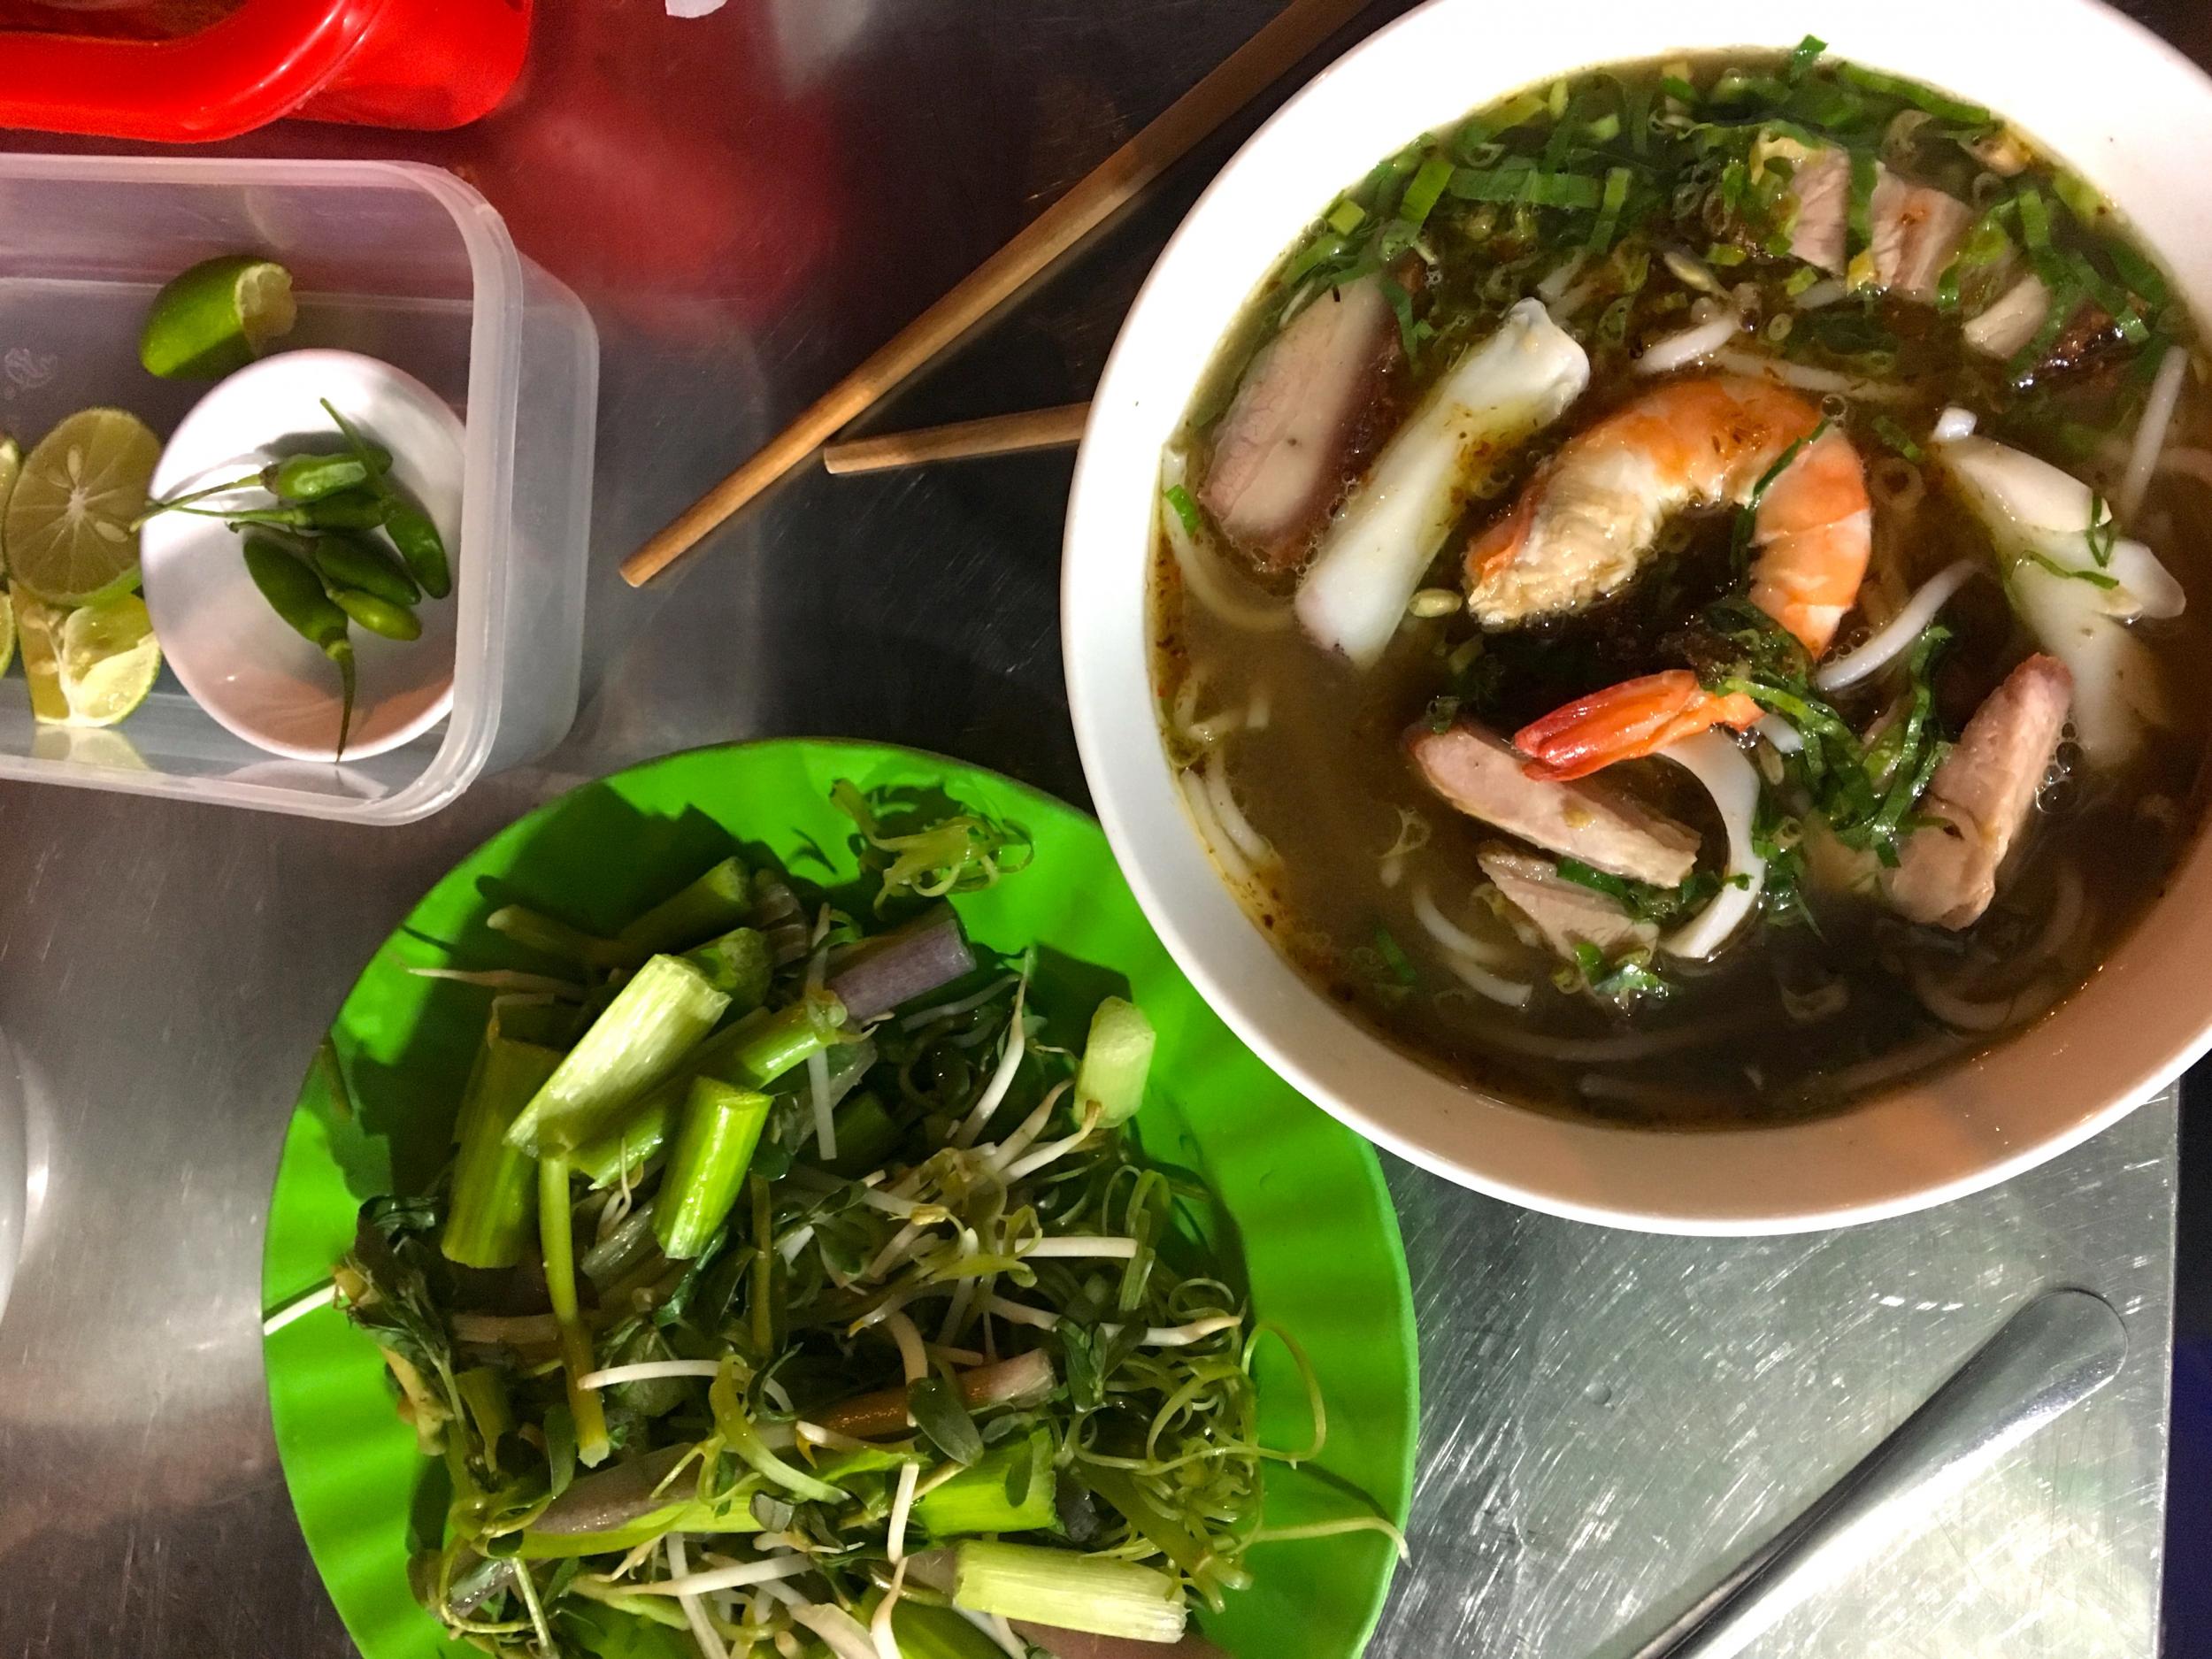 Bun mam is fermented fish soup